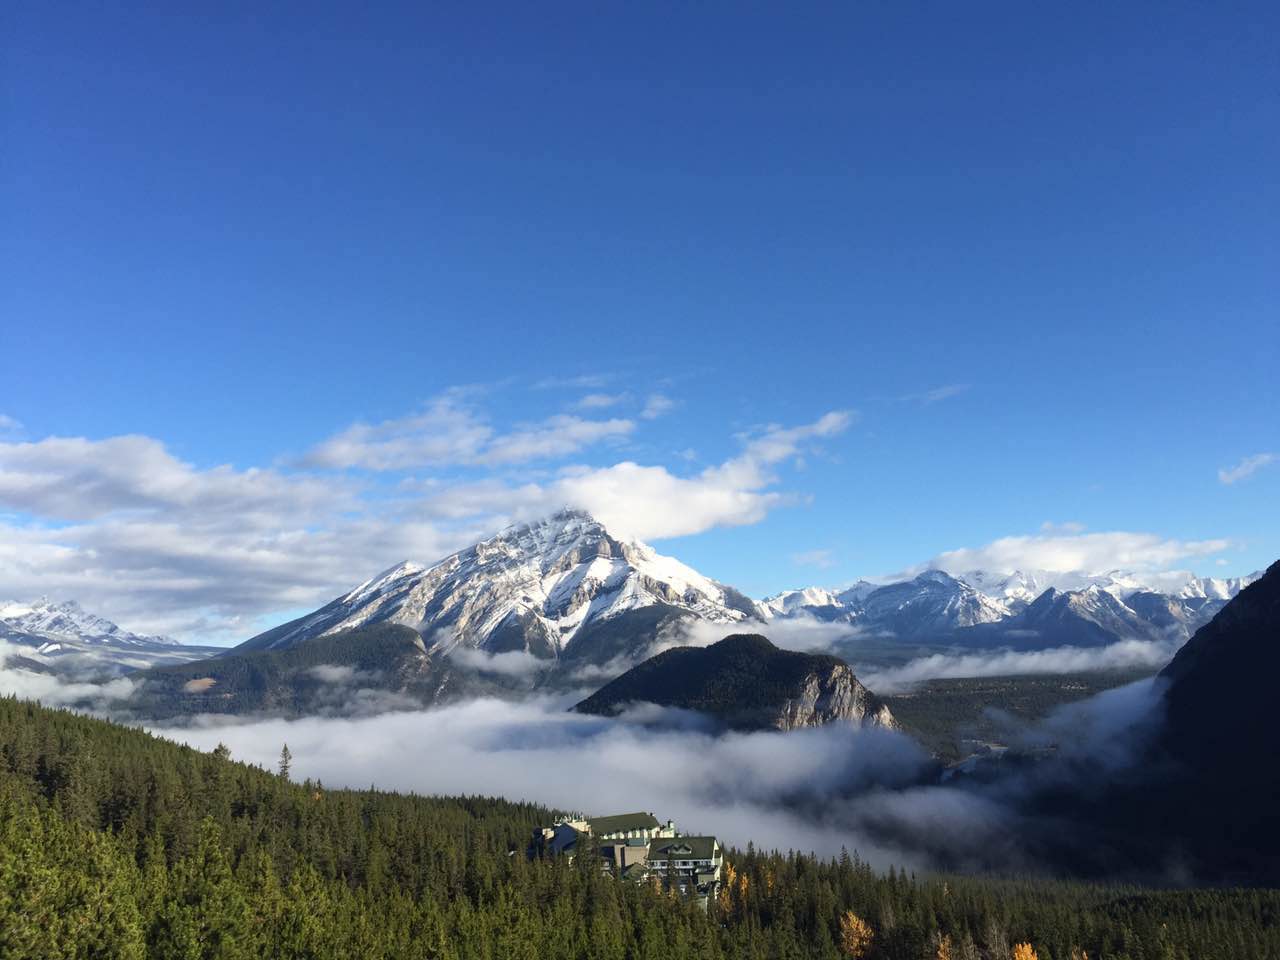 Calgary/Banff boarding + Banff + Jasper Three National Parks-2 days tour